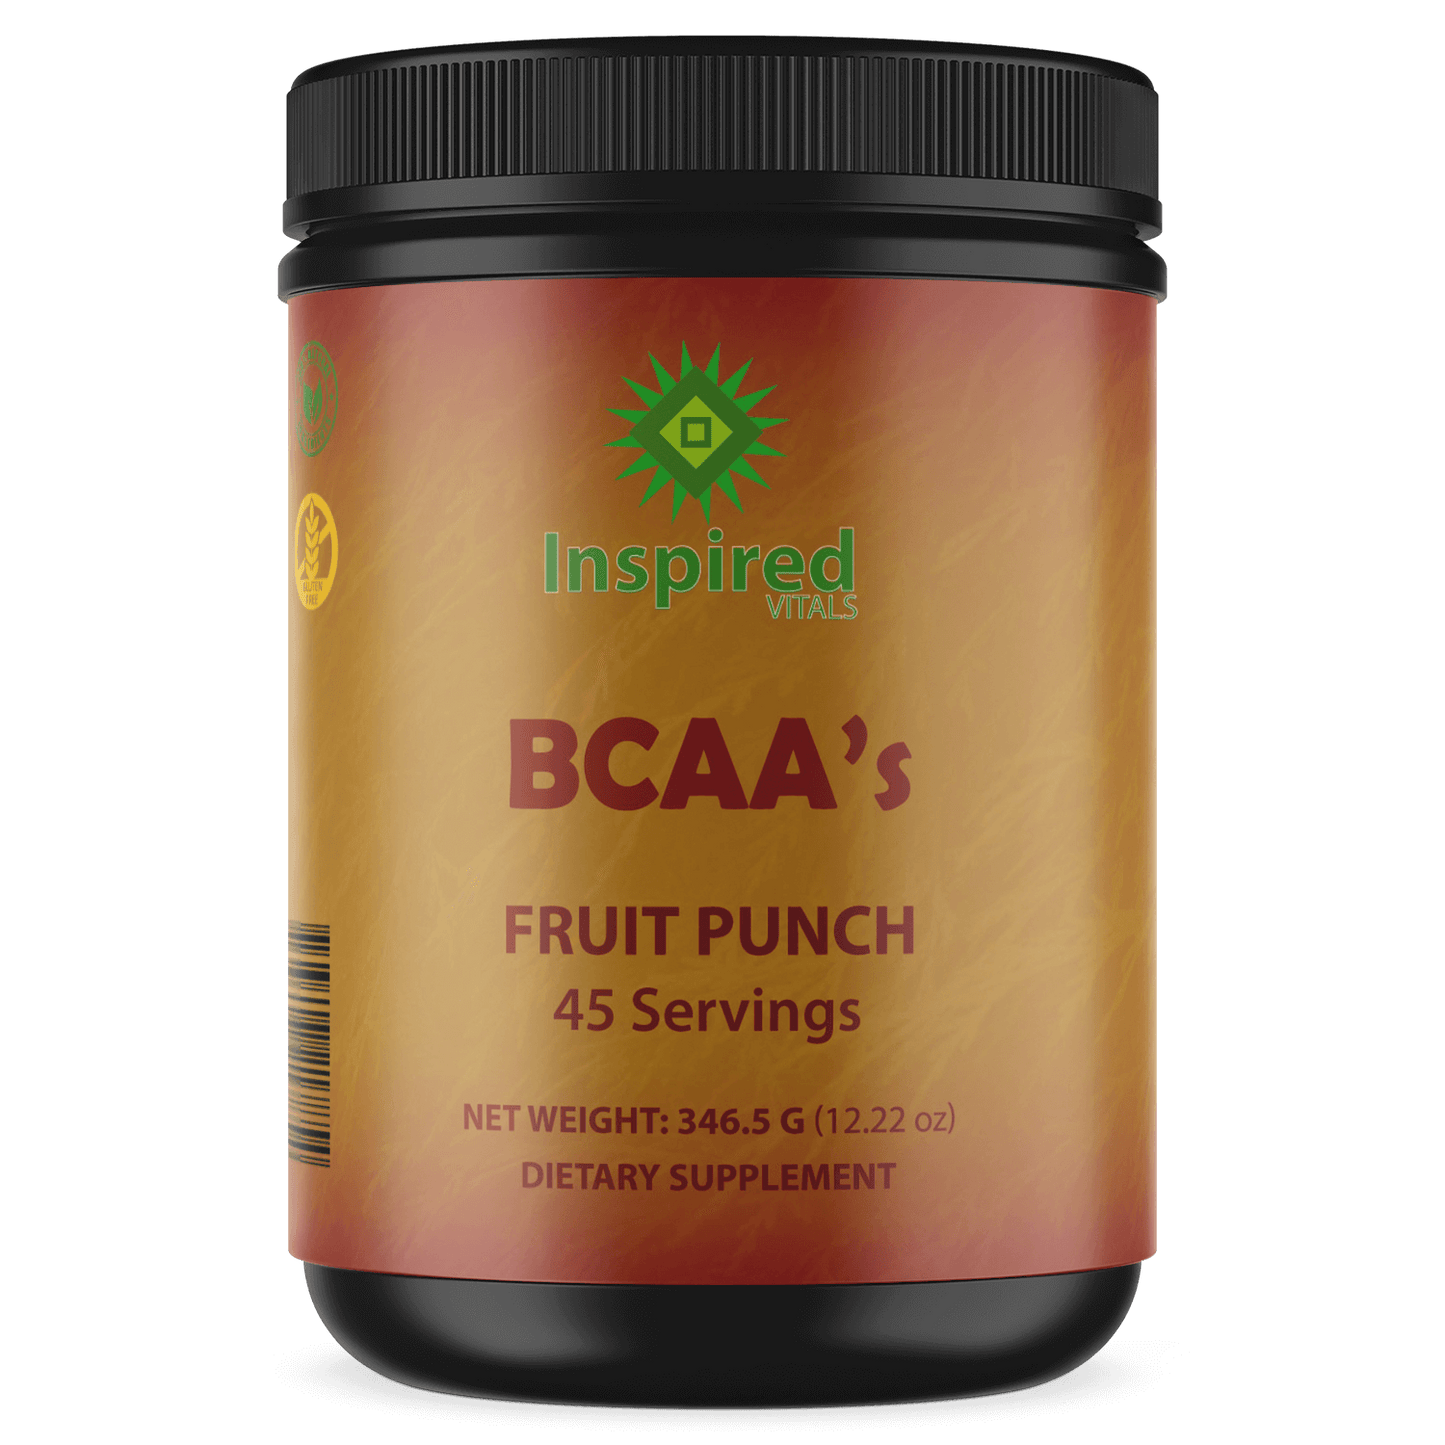 BCAA'S FRUIT PUNCH